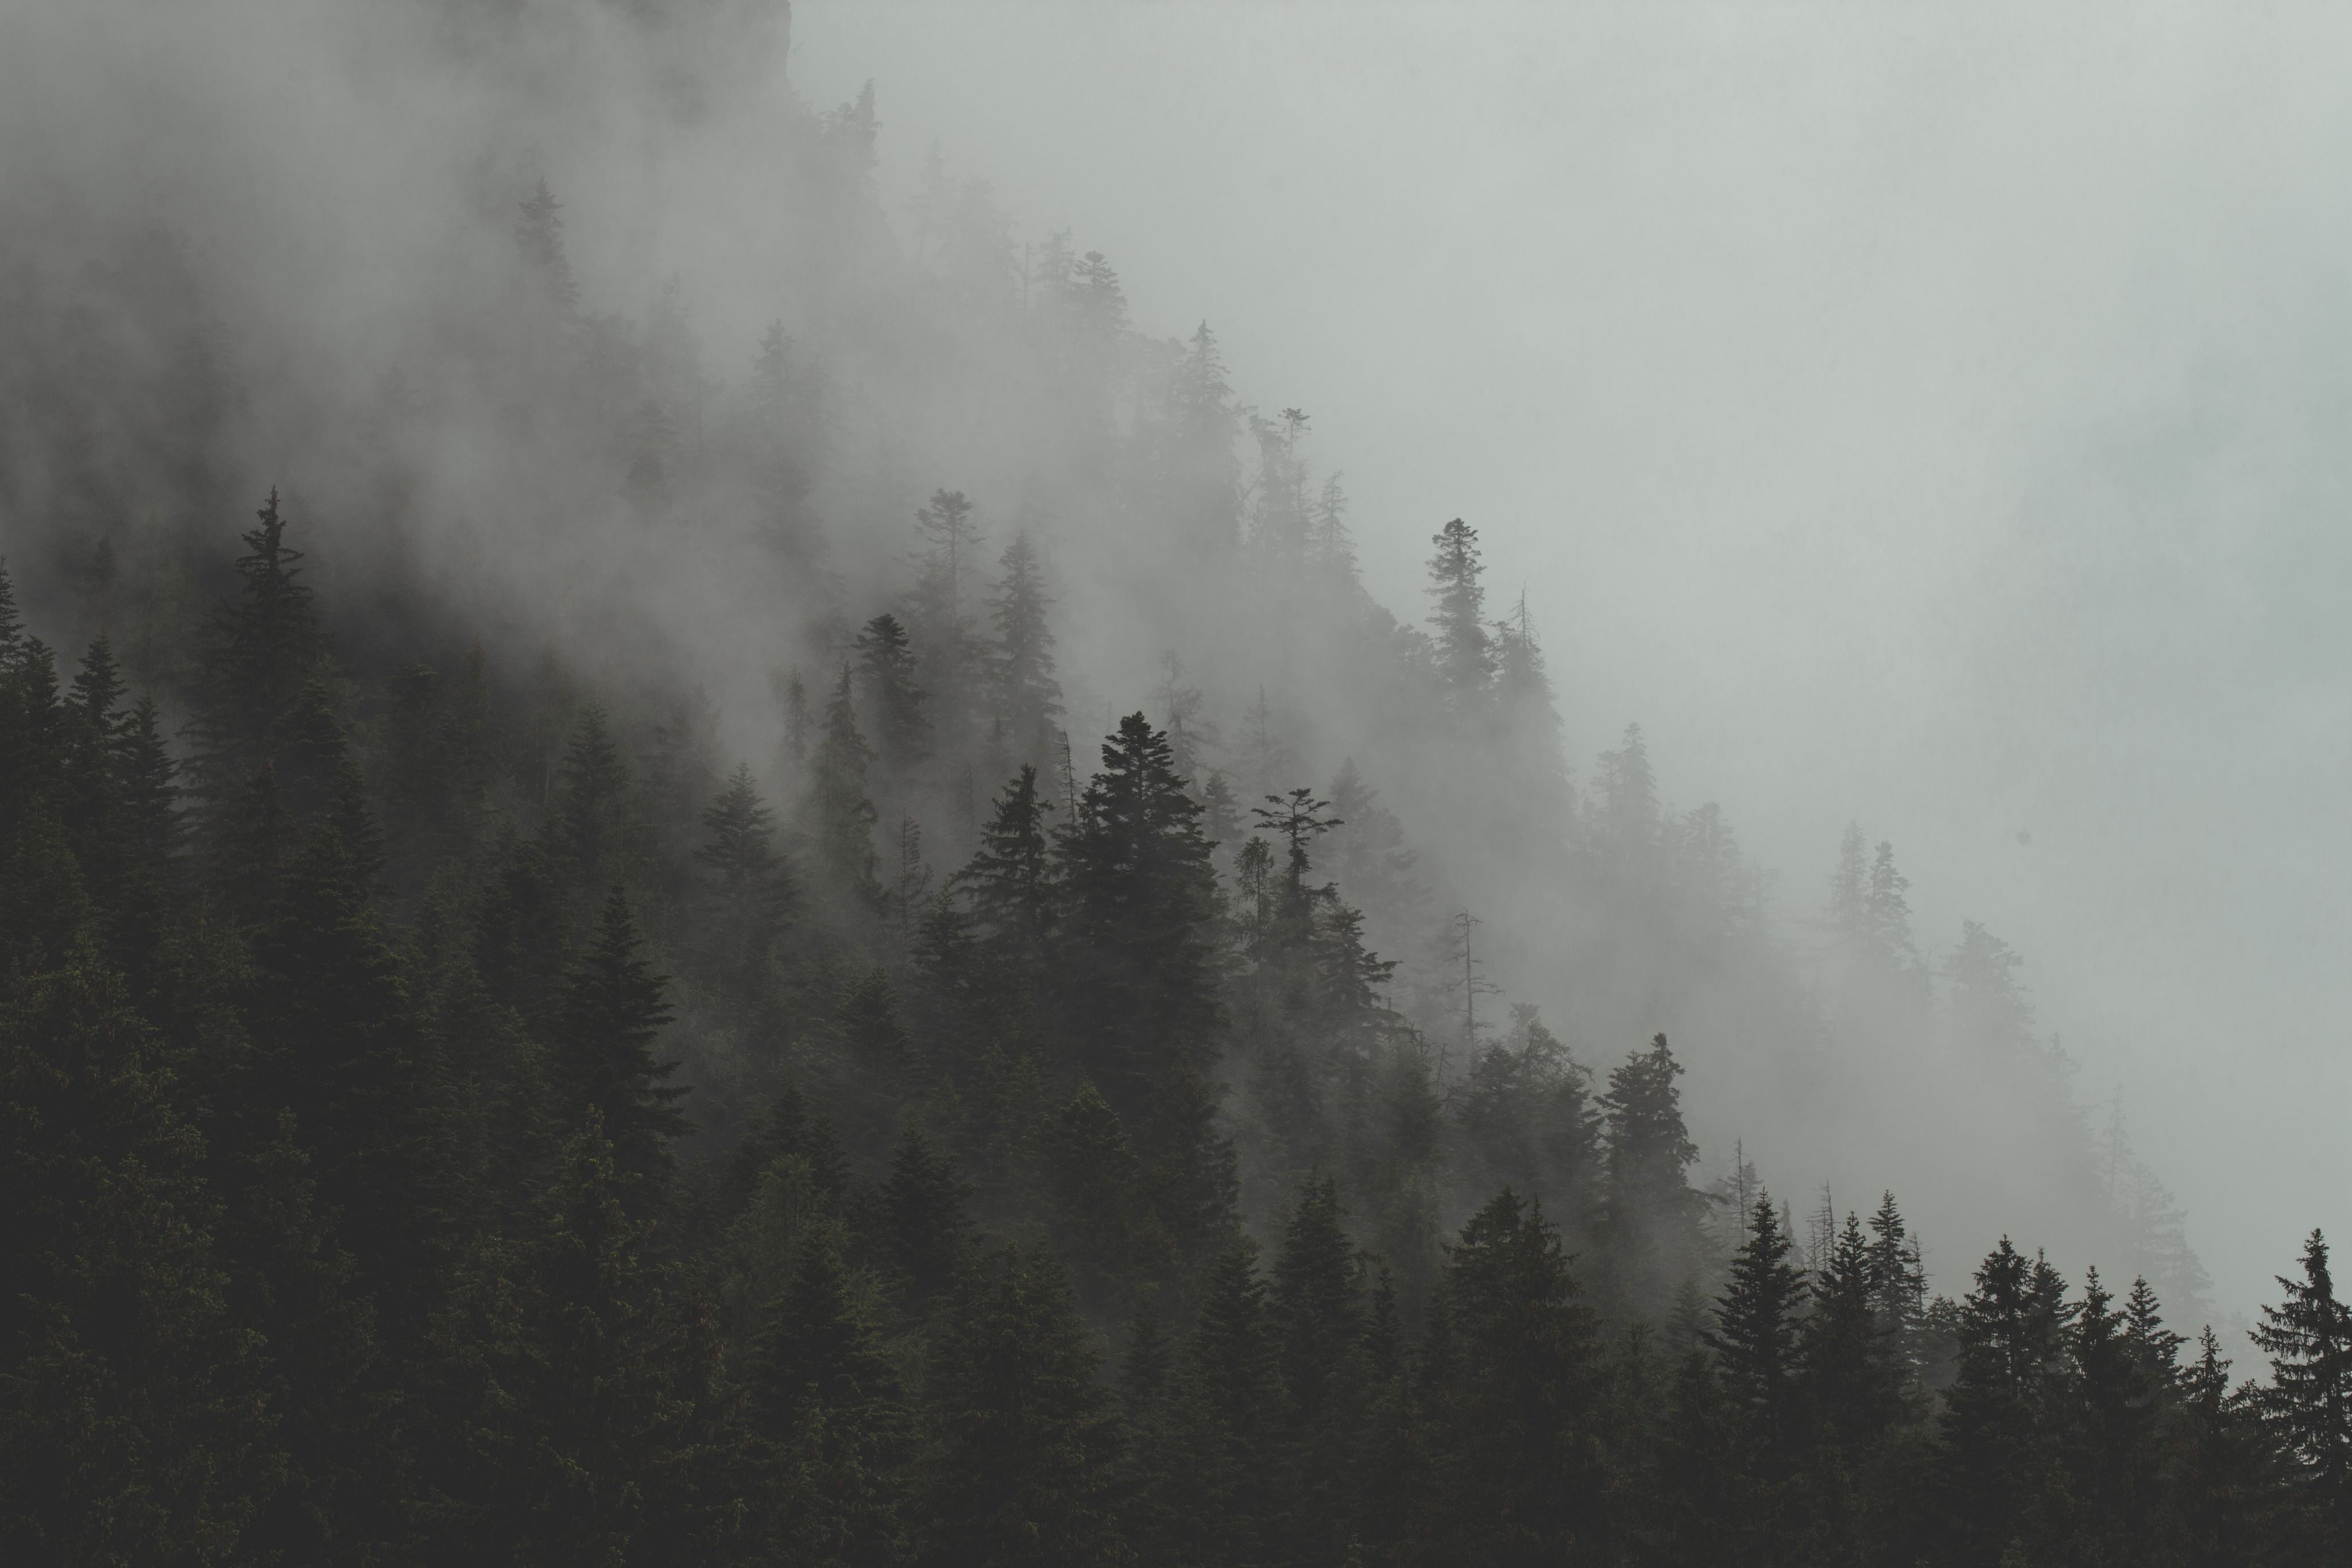 fog rolling through forest hillside